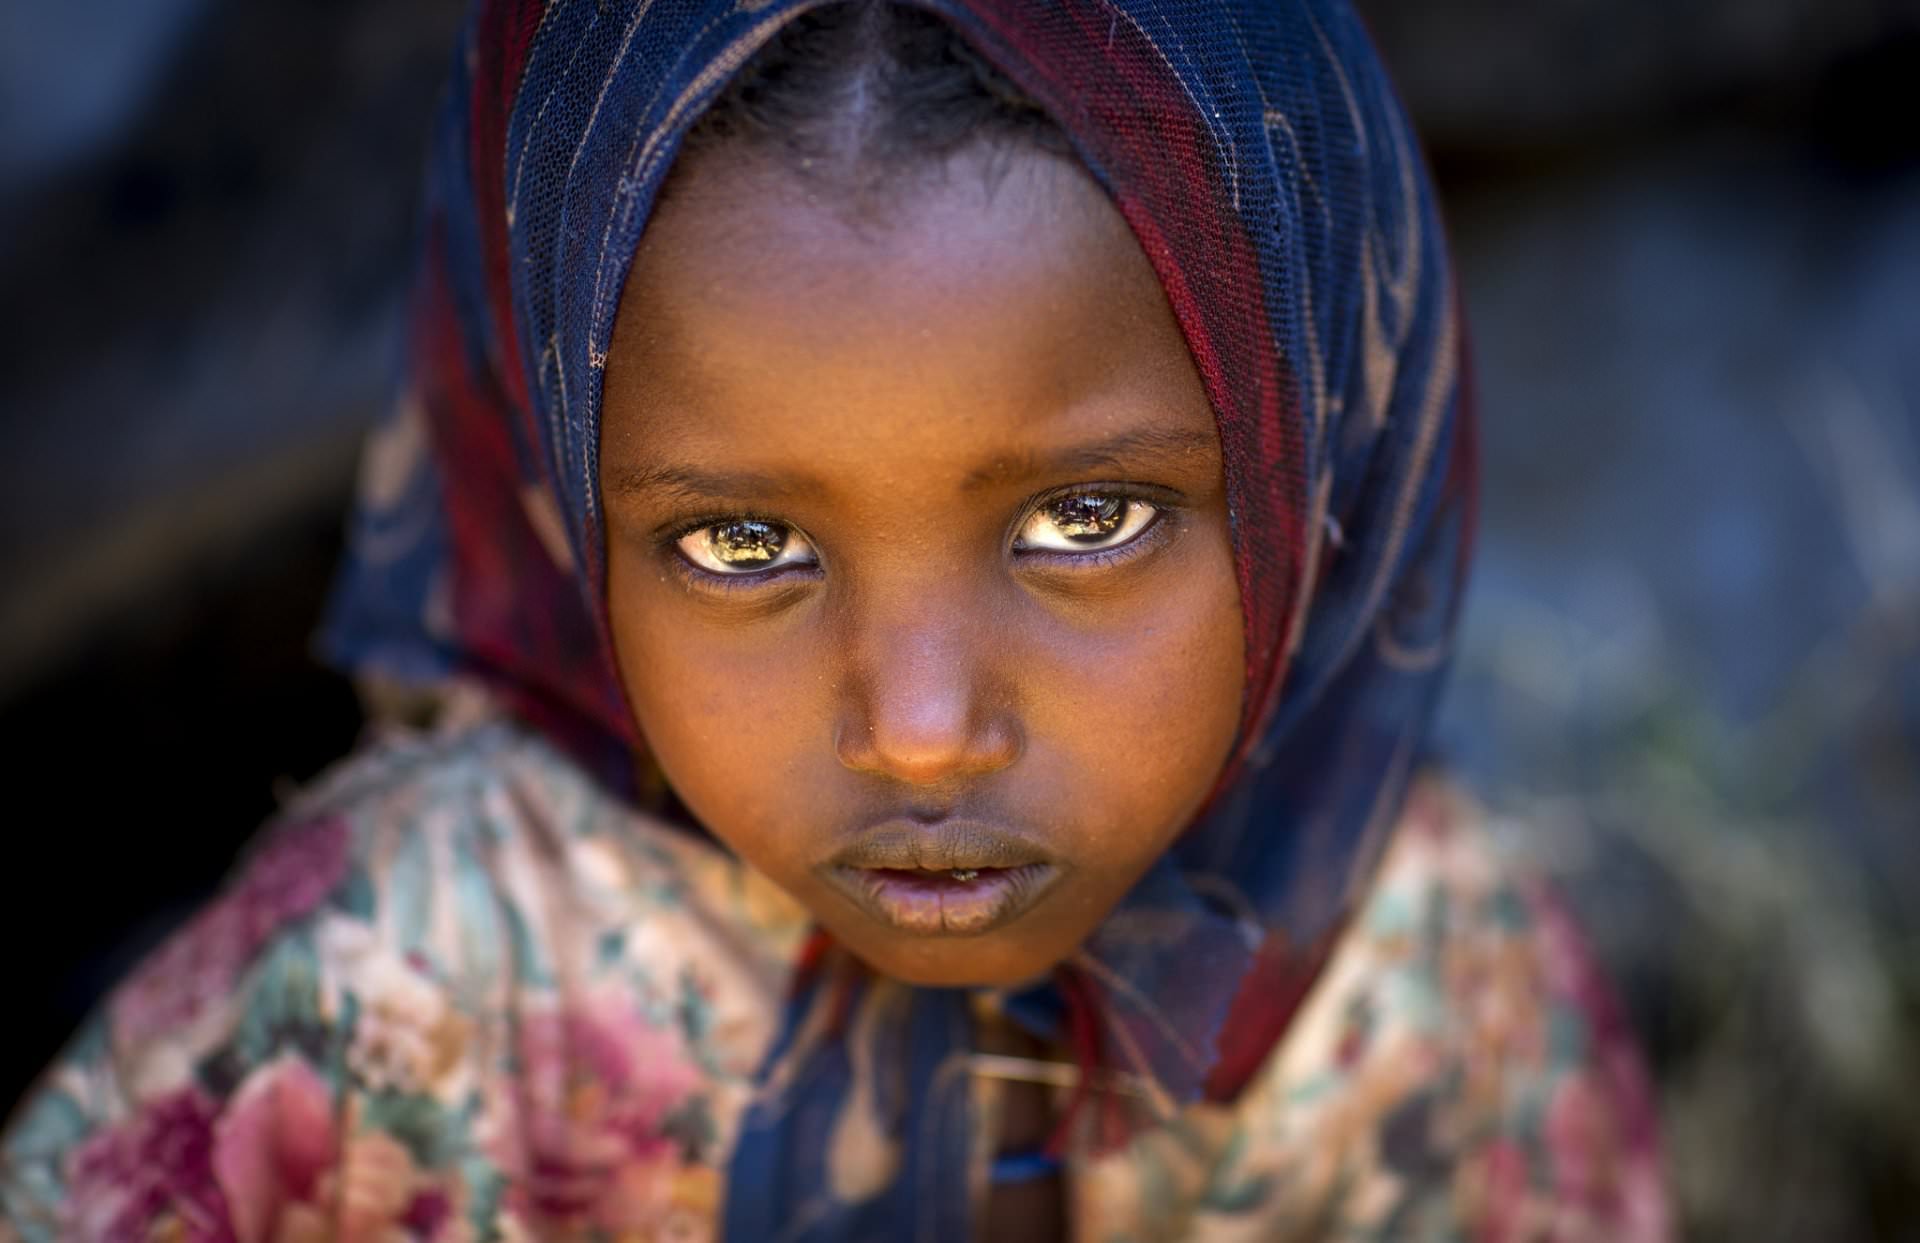 africa-ethiopia-yabelo-girl-boranes-child-man-planet-people-eric-lafforgue-photography.jpg